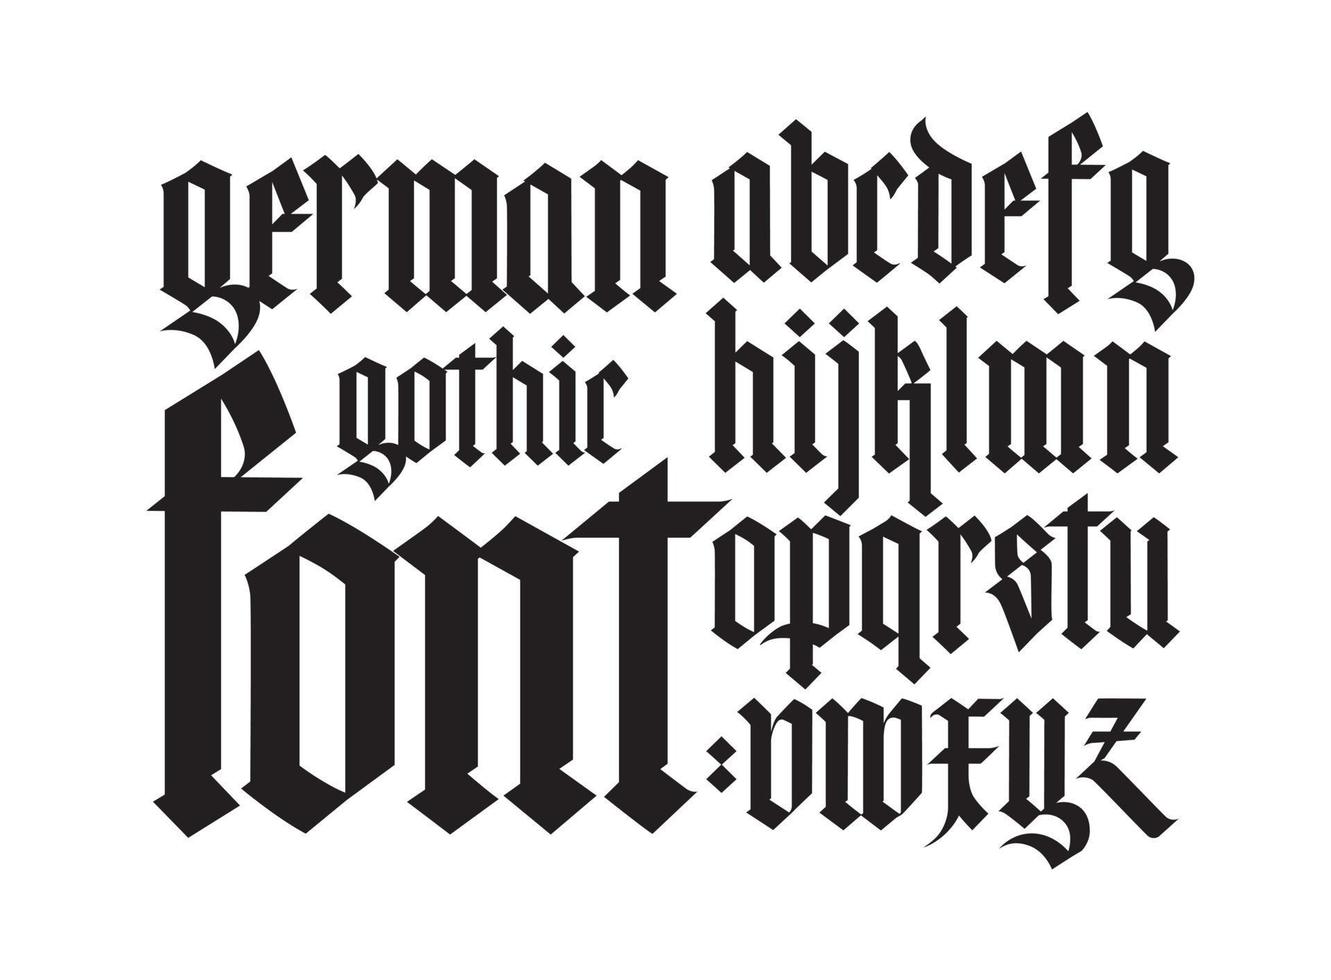 Gothic, English alphabet. vector